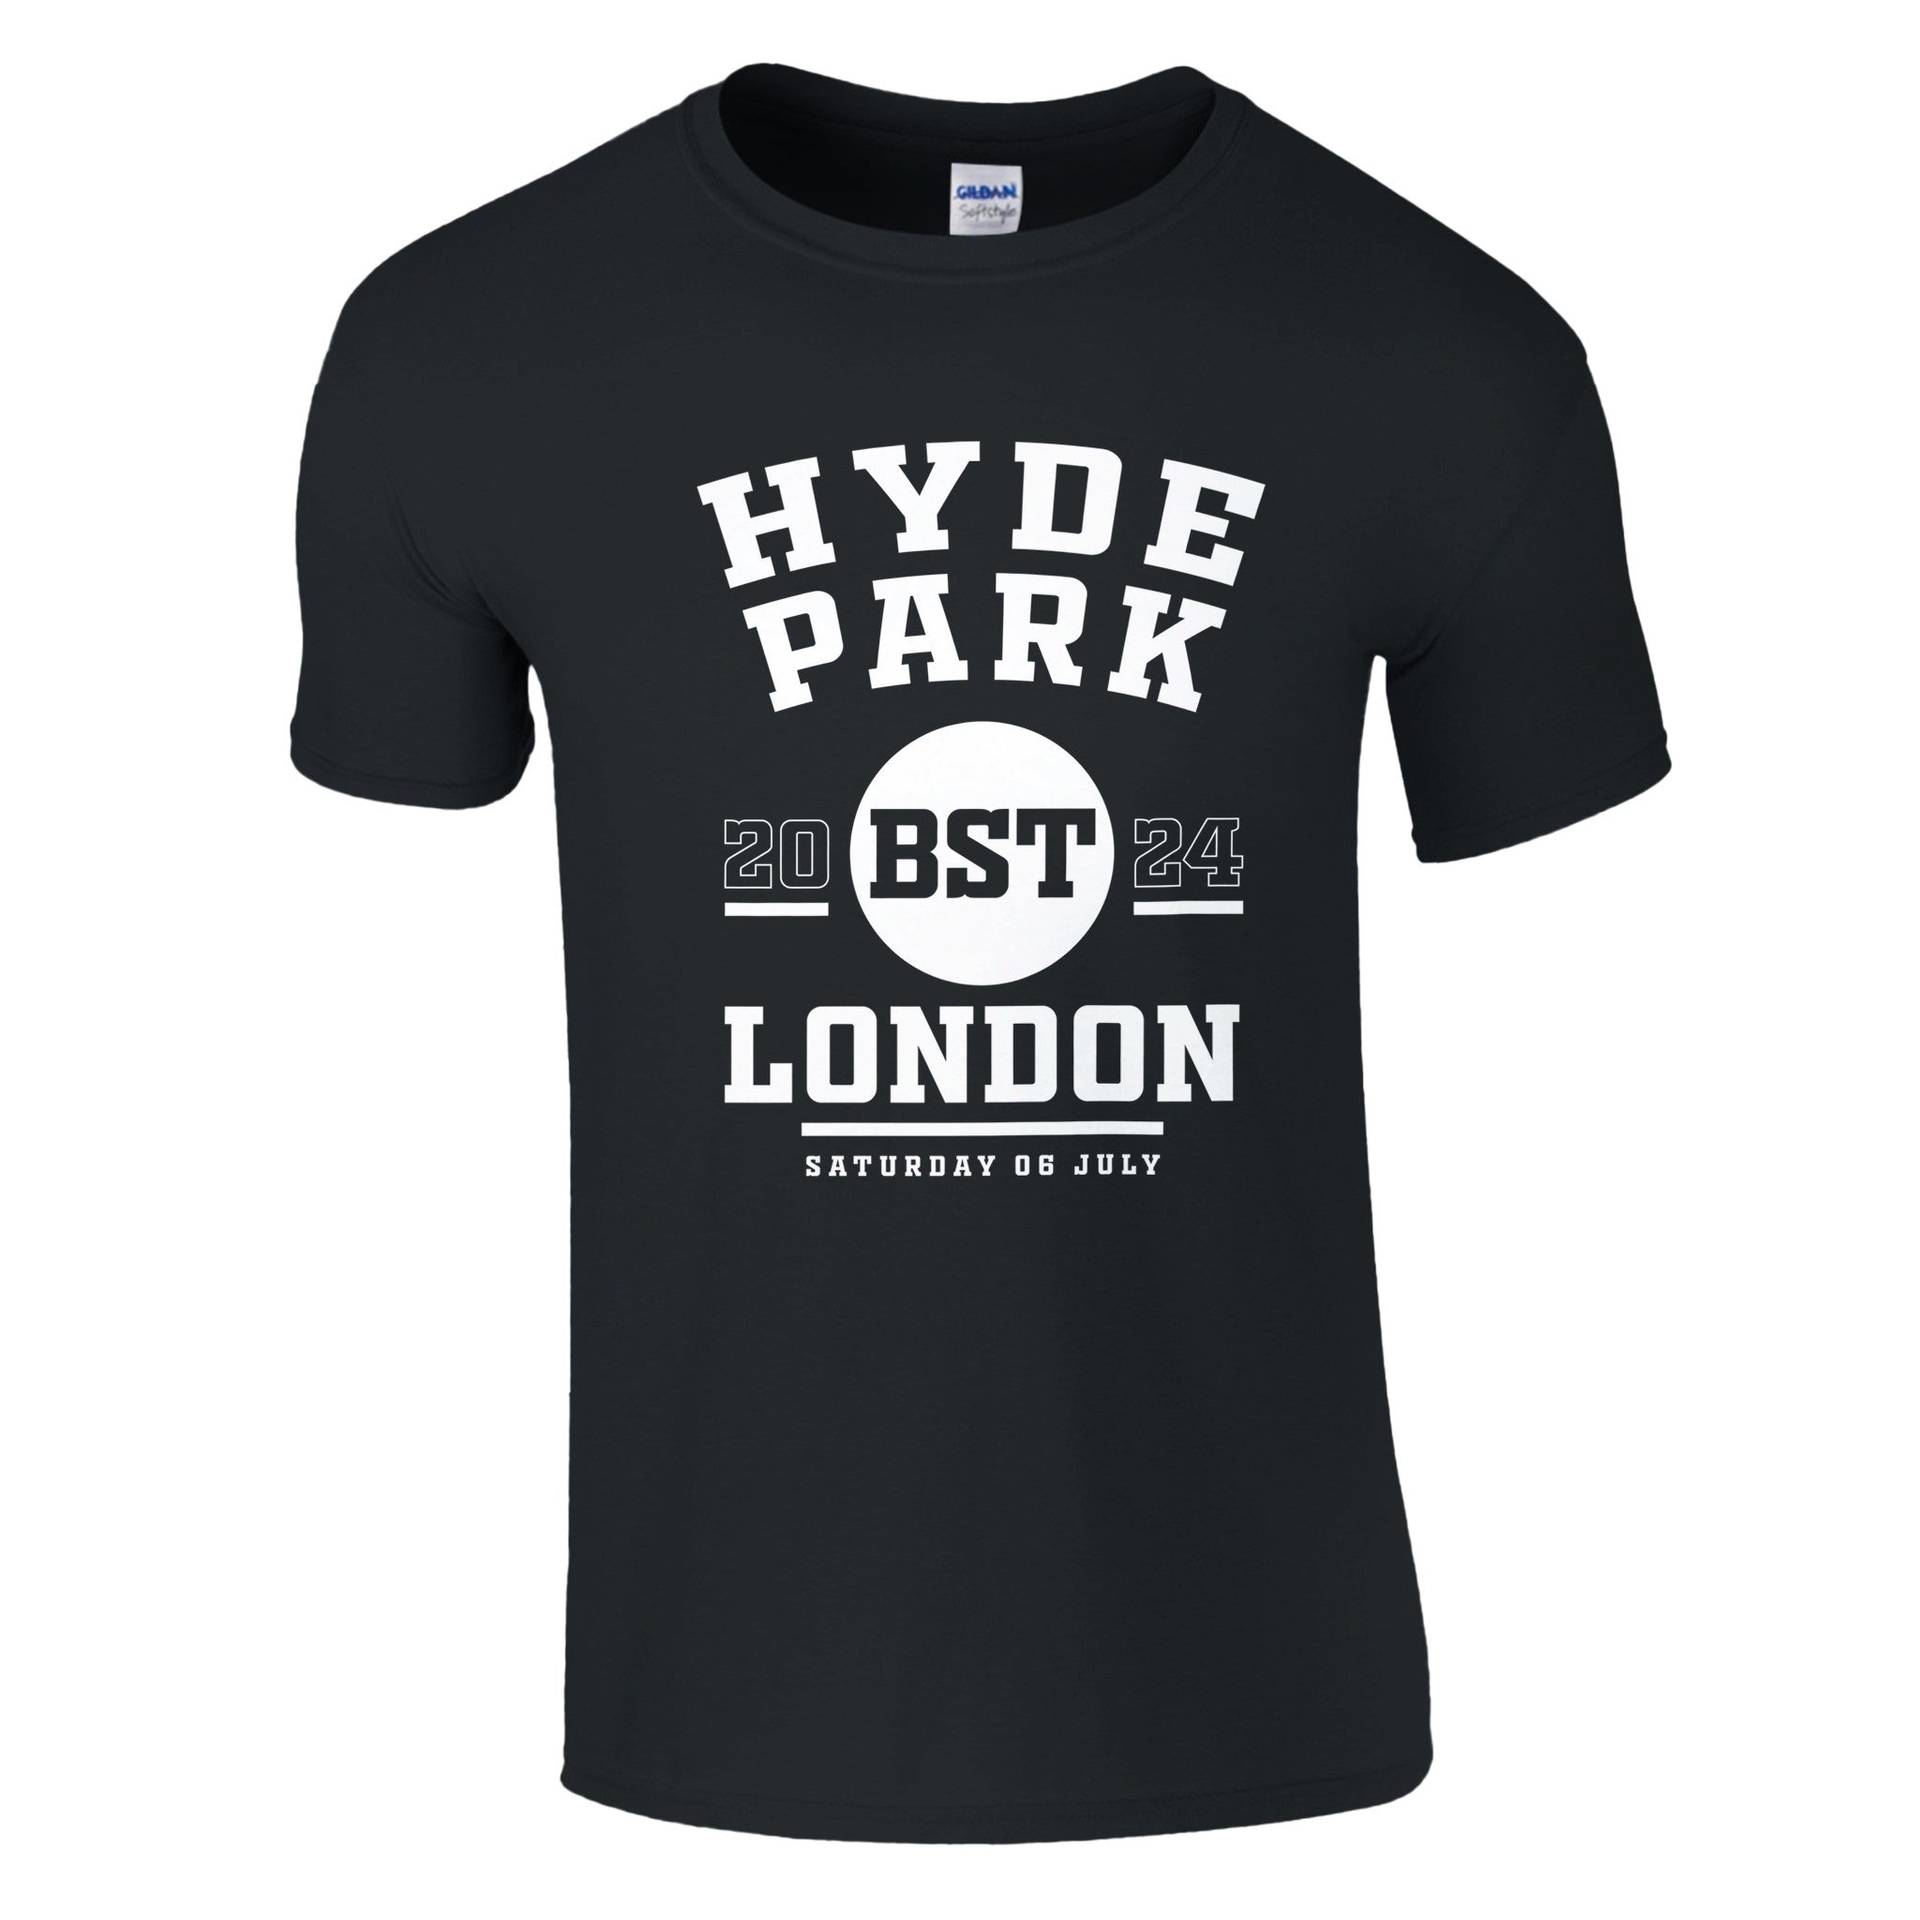 BST Hyde Park Robbie Williams Event T-Shirt